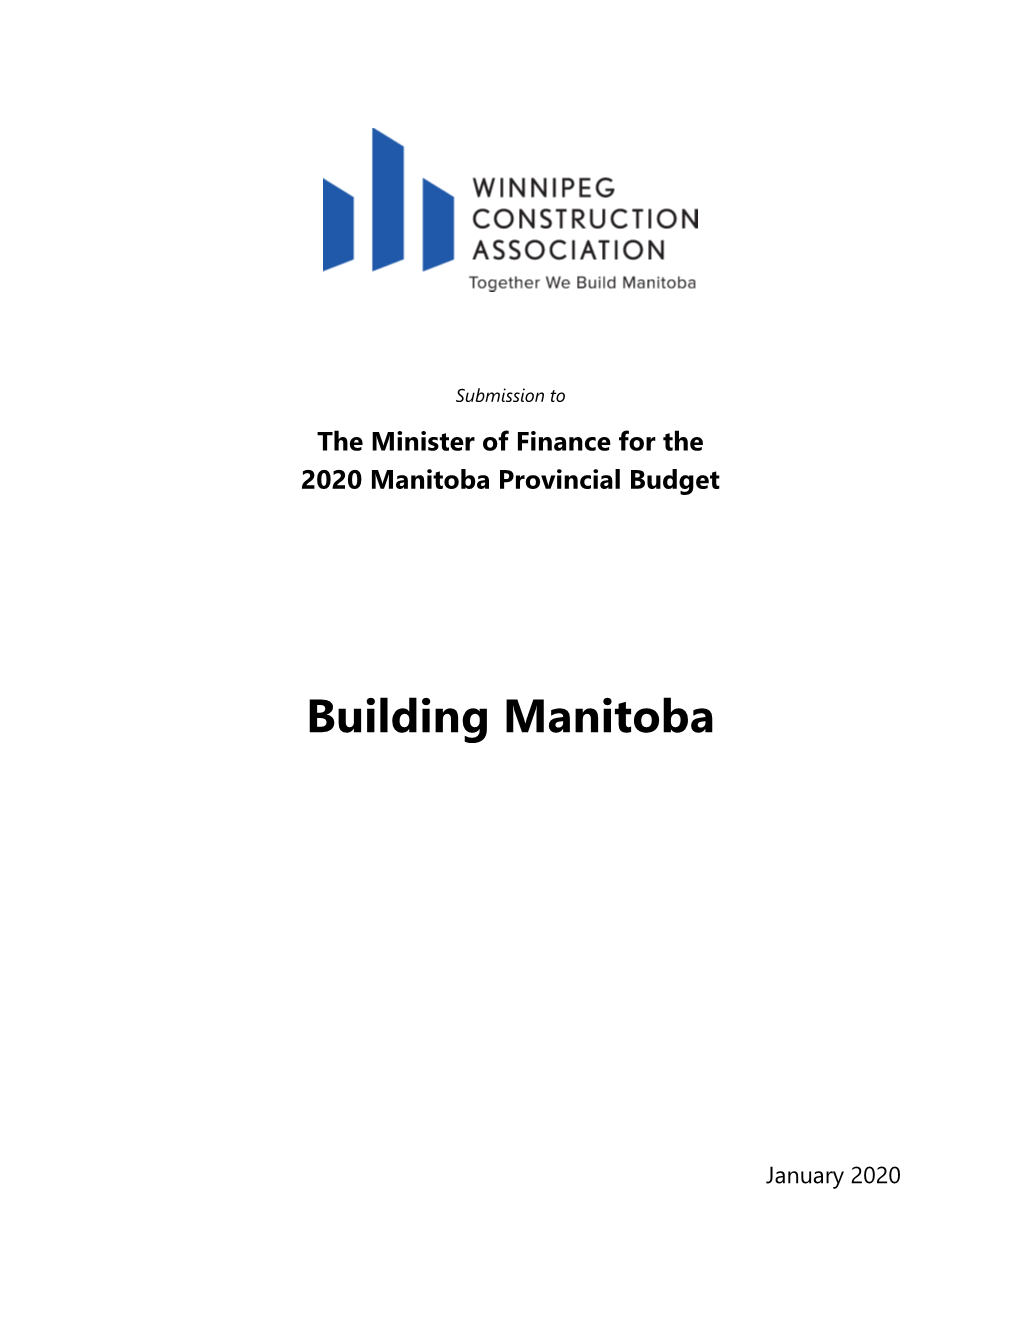 Building Manitoba